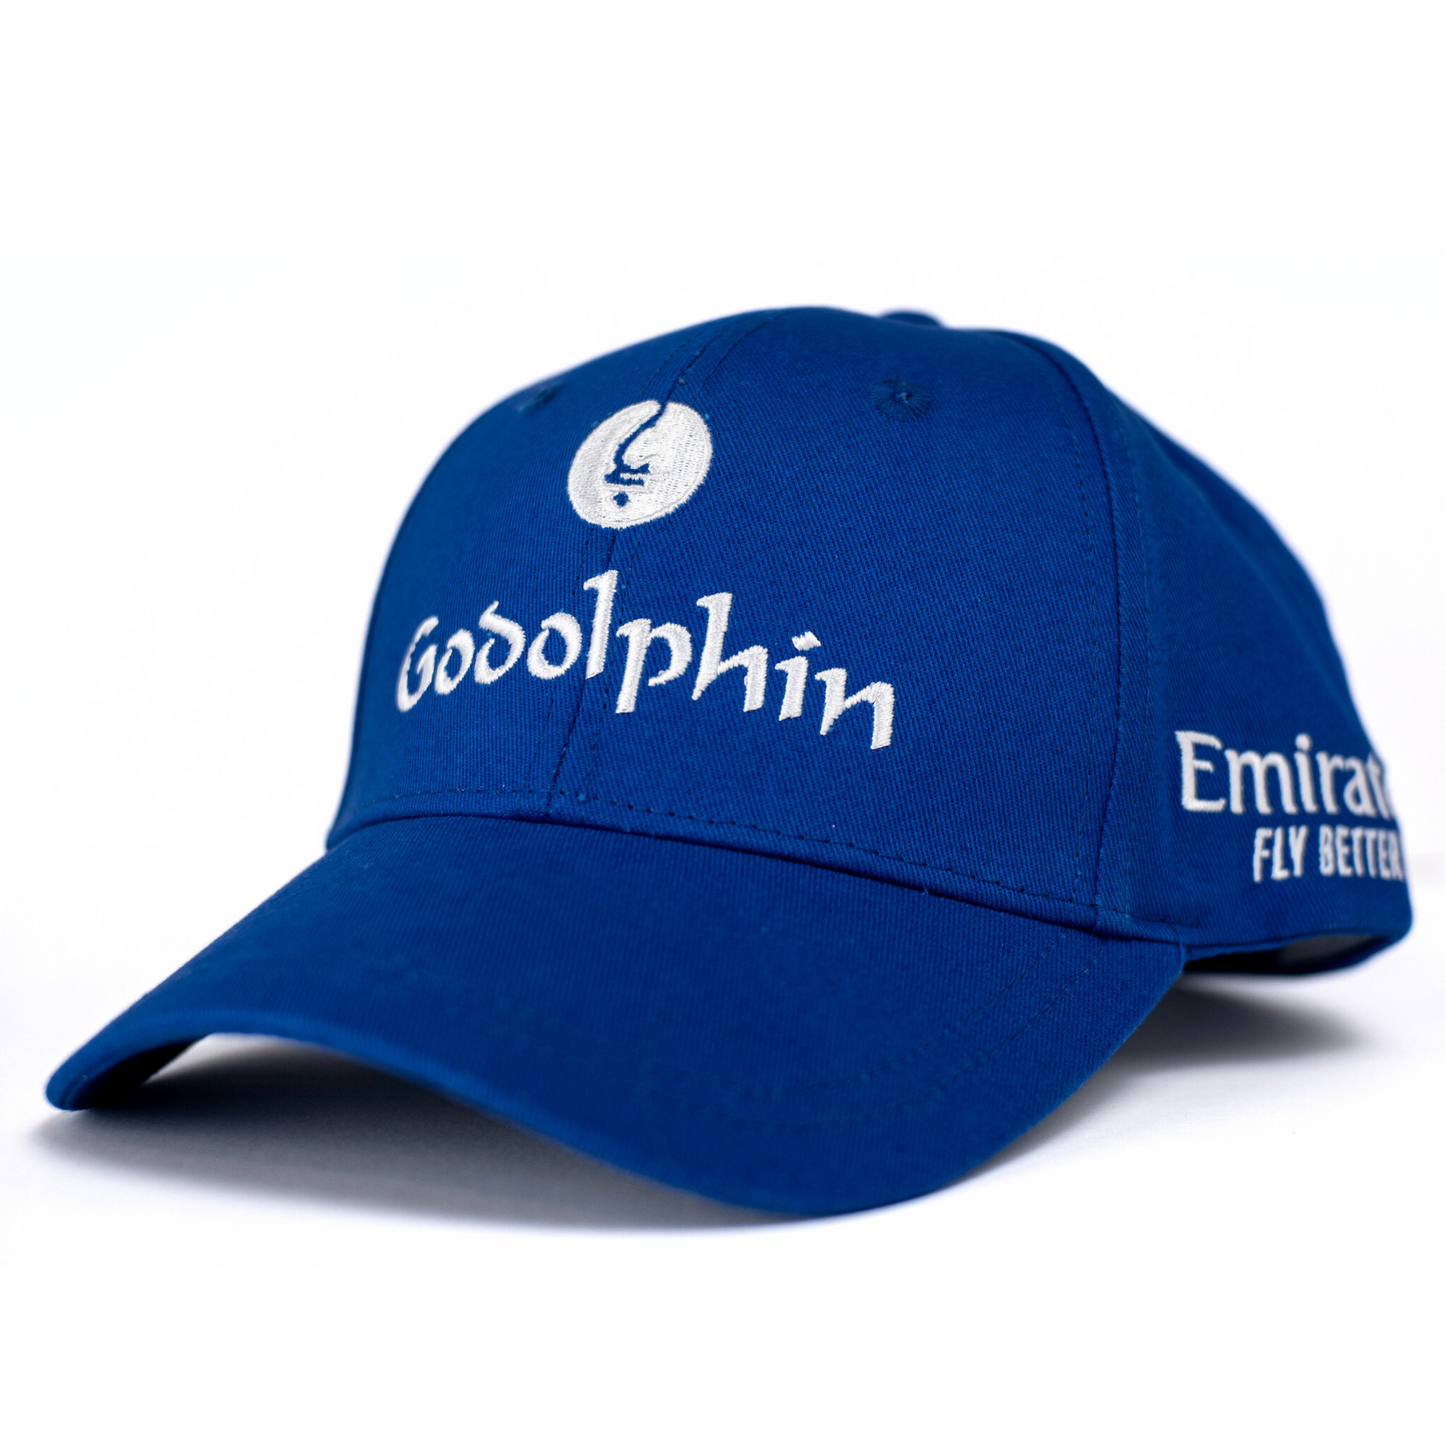 Godolphin Cap - Blue